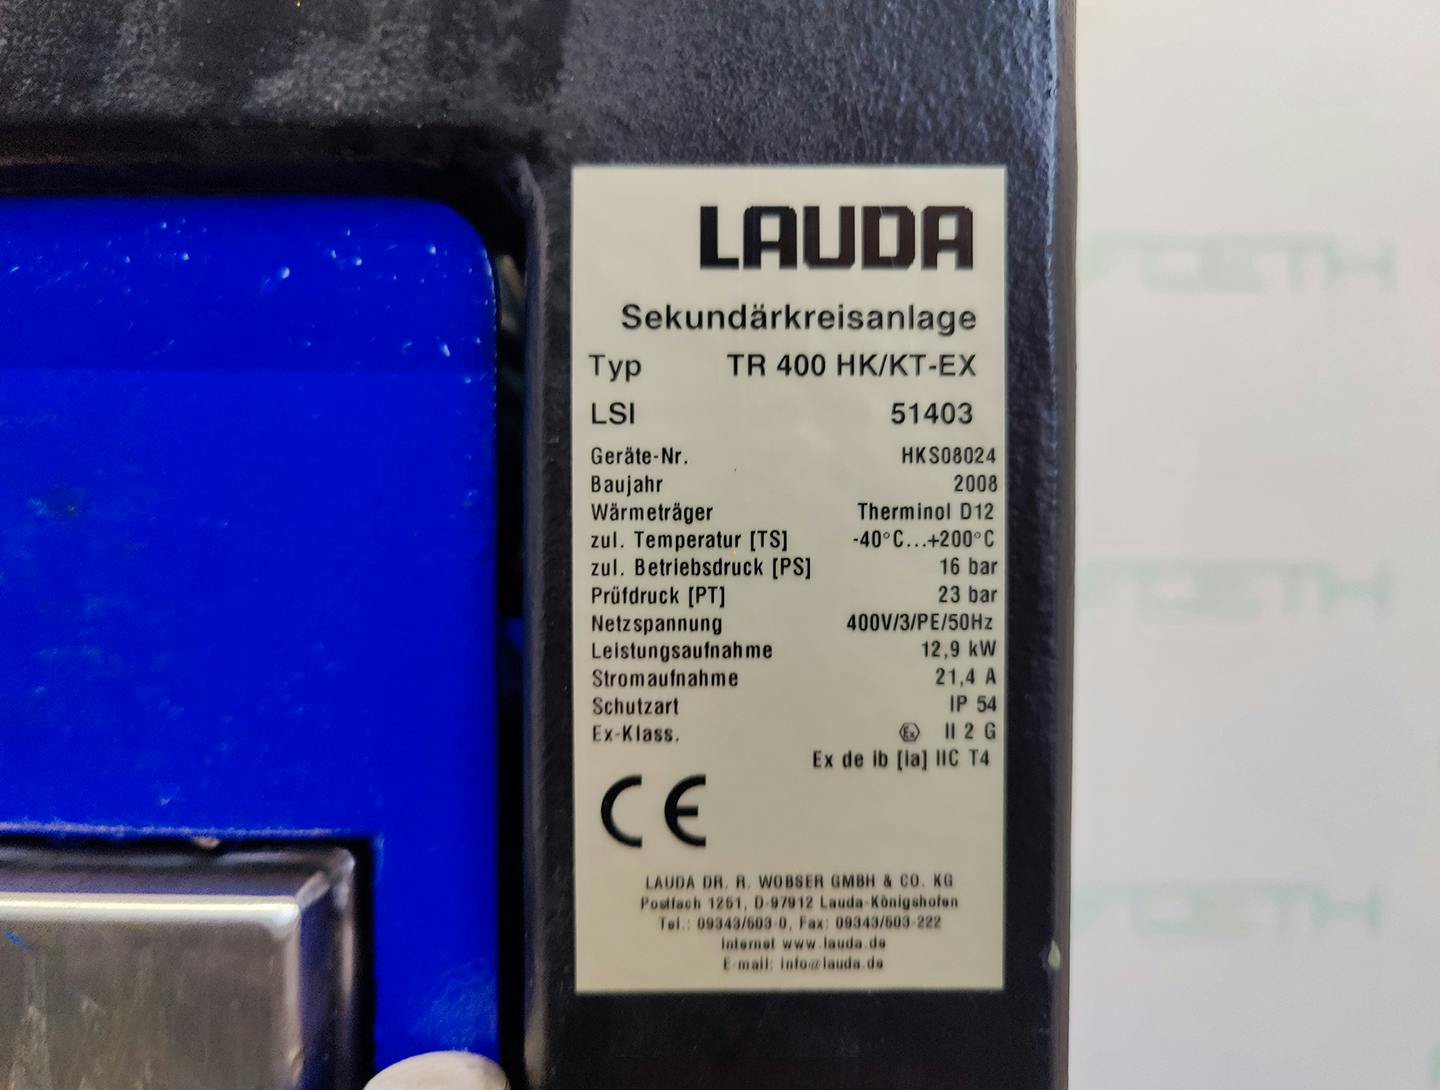 Lauda TR400 HK/KT-EX "secondary circuit system" - Temperiergerät - image 5